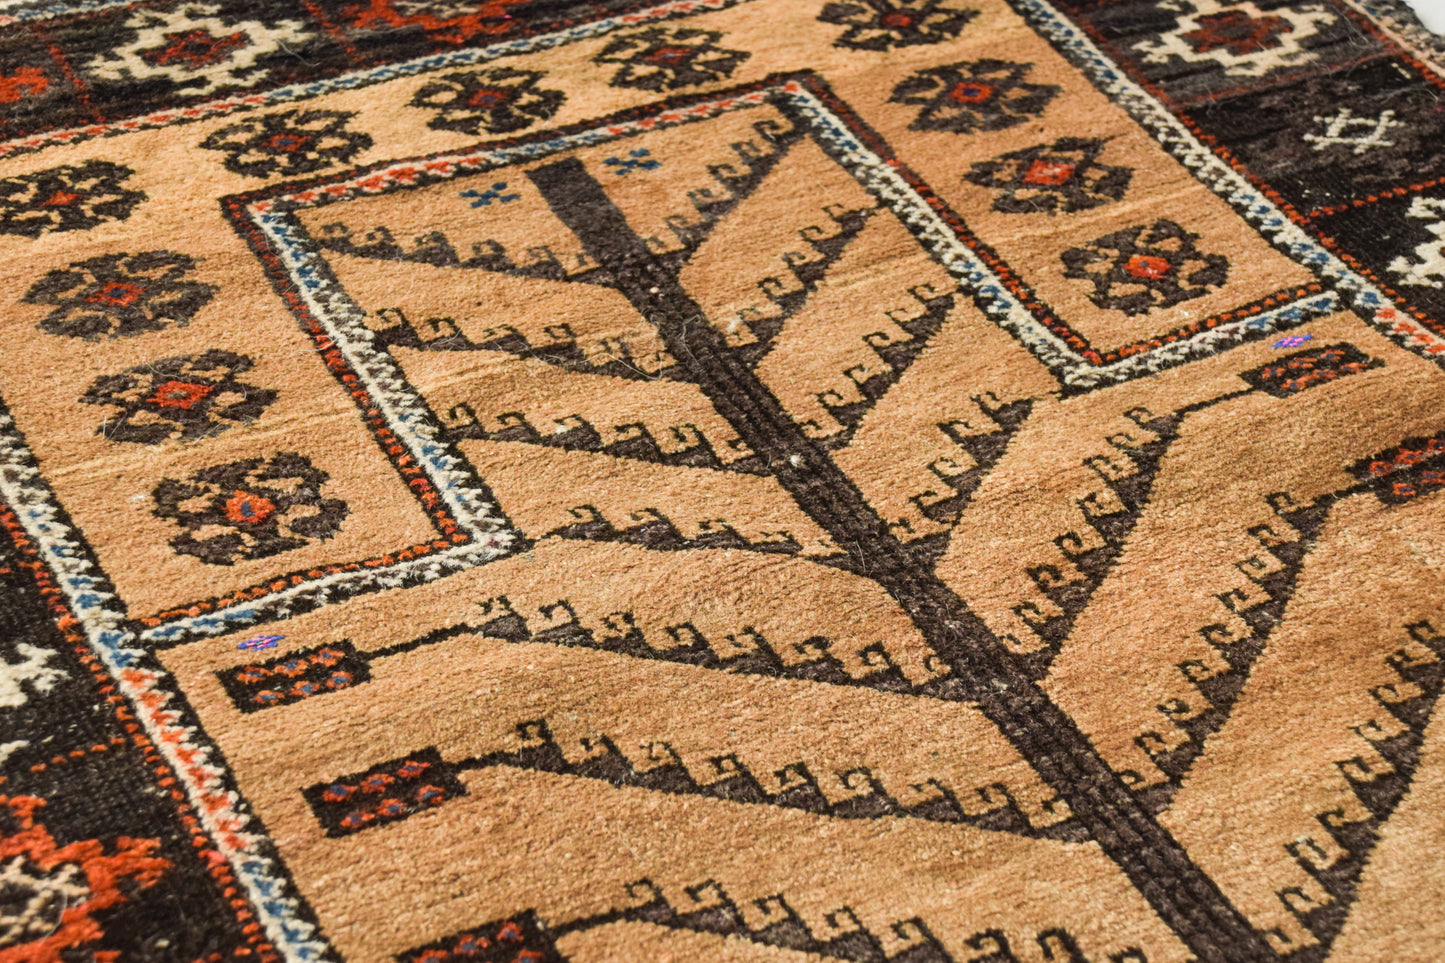 Interesante alfombra afgana tejida a mano